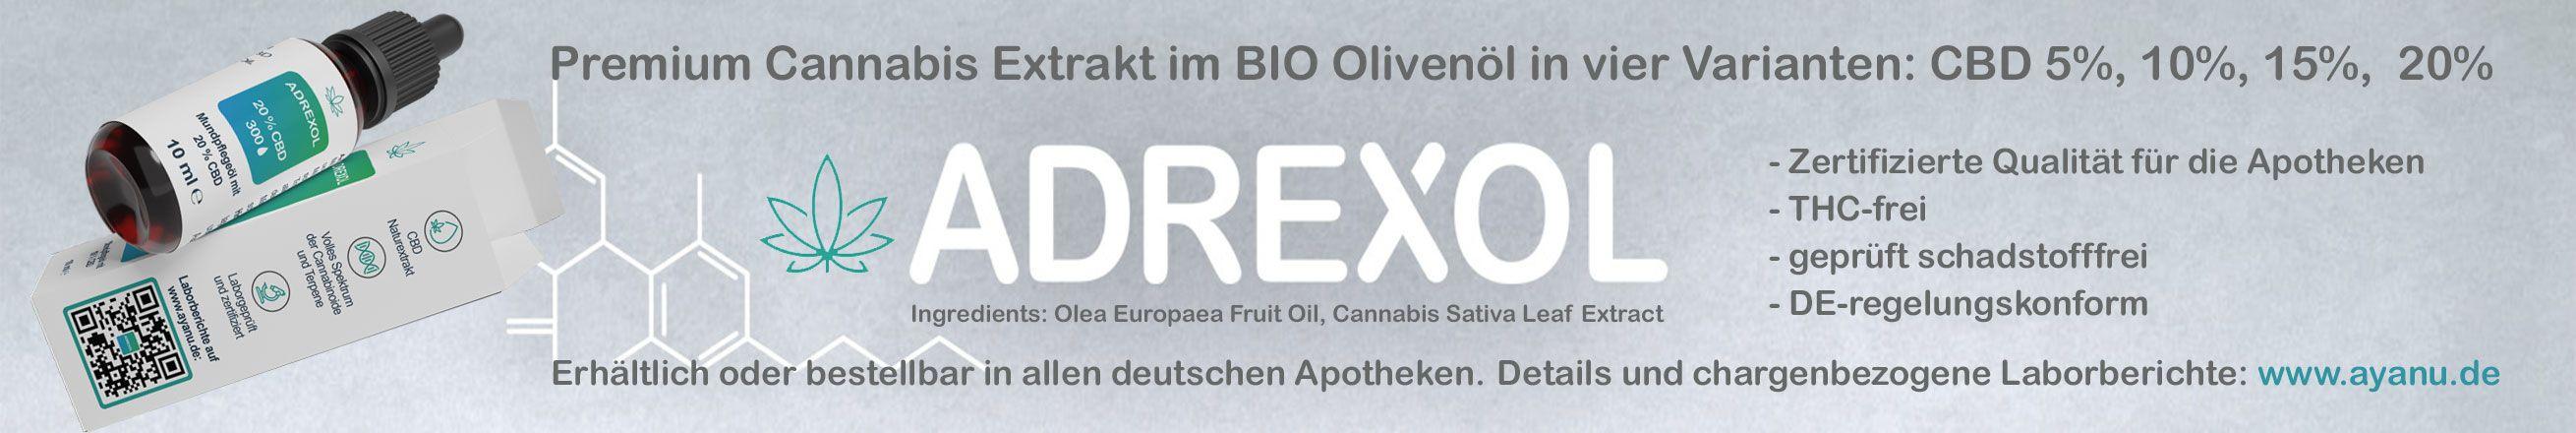 Adrexol CBD Öl Produkte Banner Ayanu